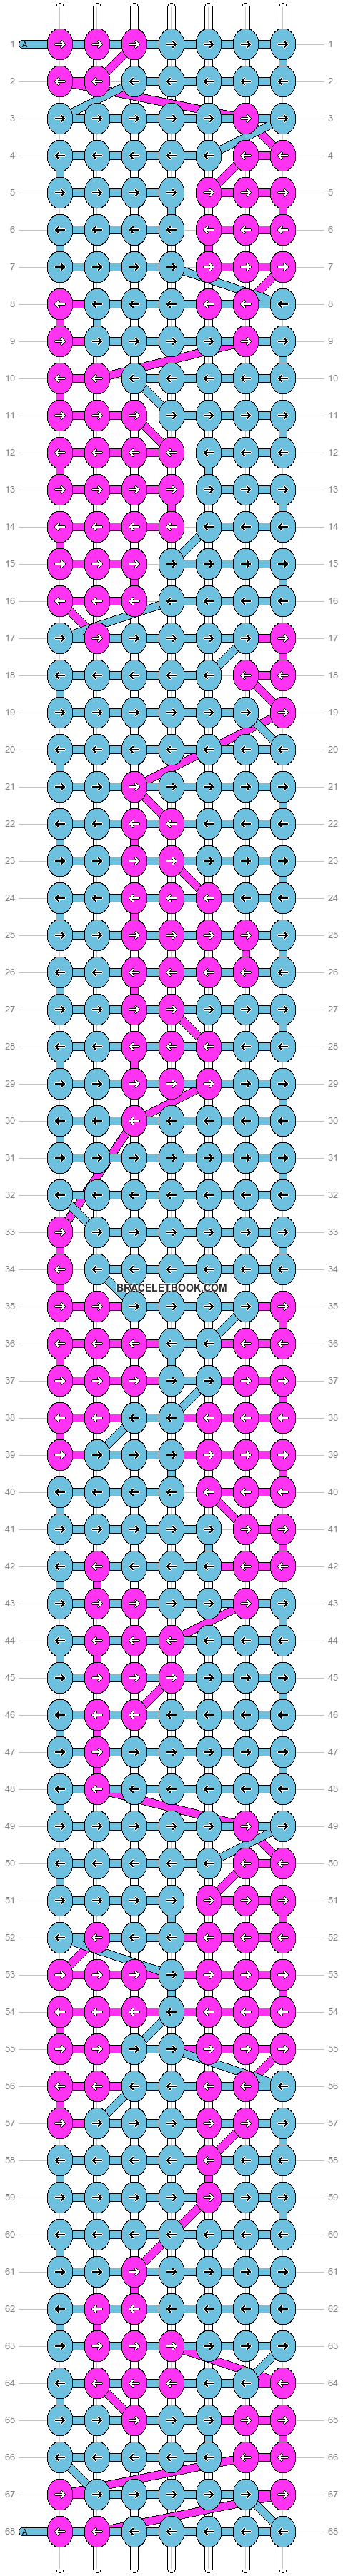 Alpha pattern #1654 variation #57647 pattern